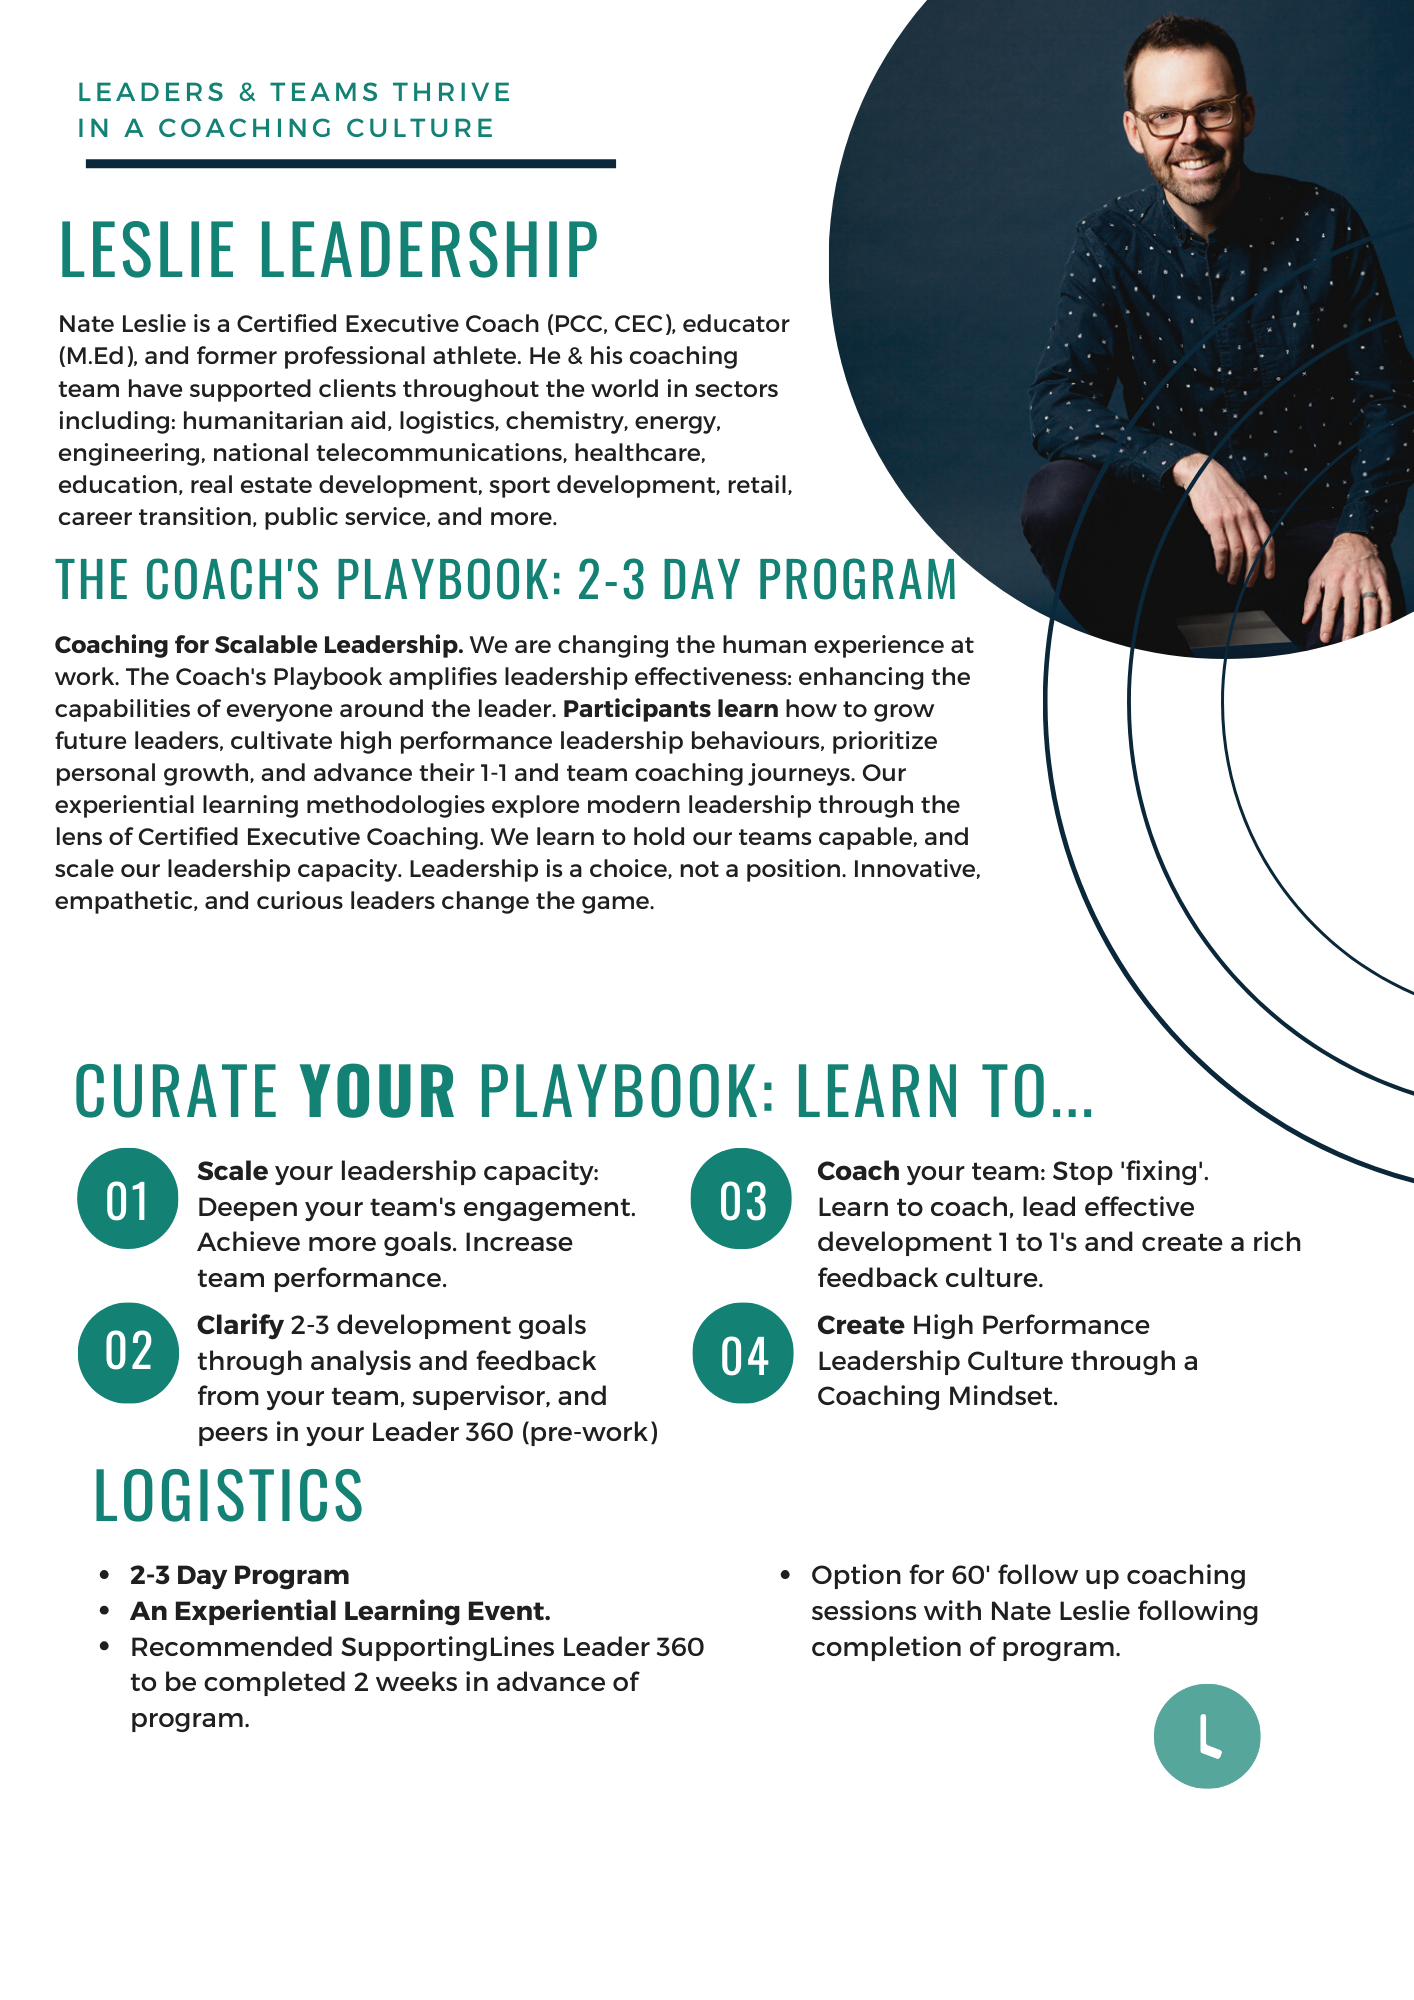 Coach's Playbook 2-3 Day Program